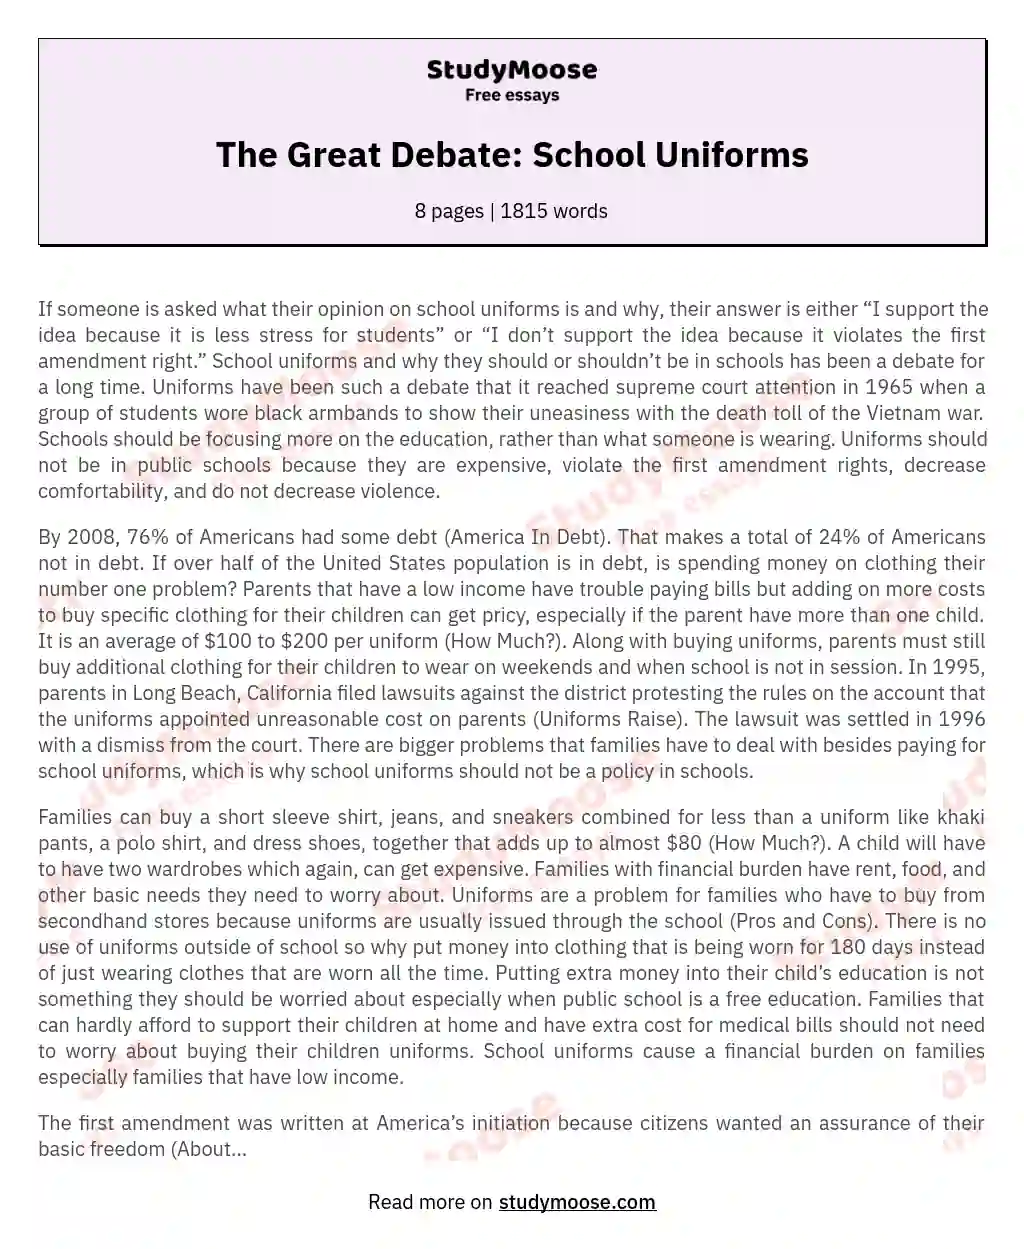 The Great Debate: School Uniforms